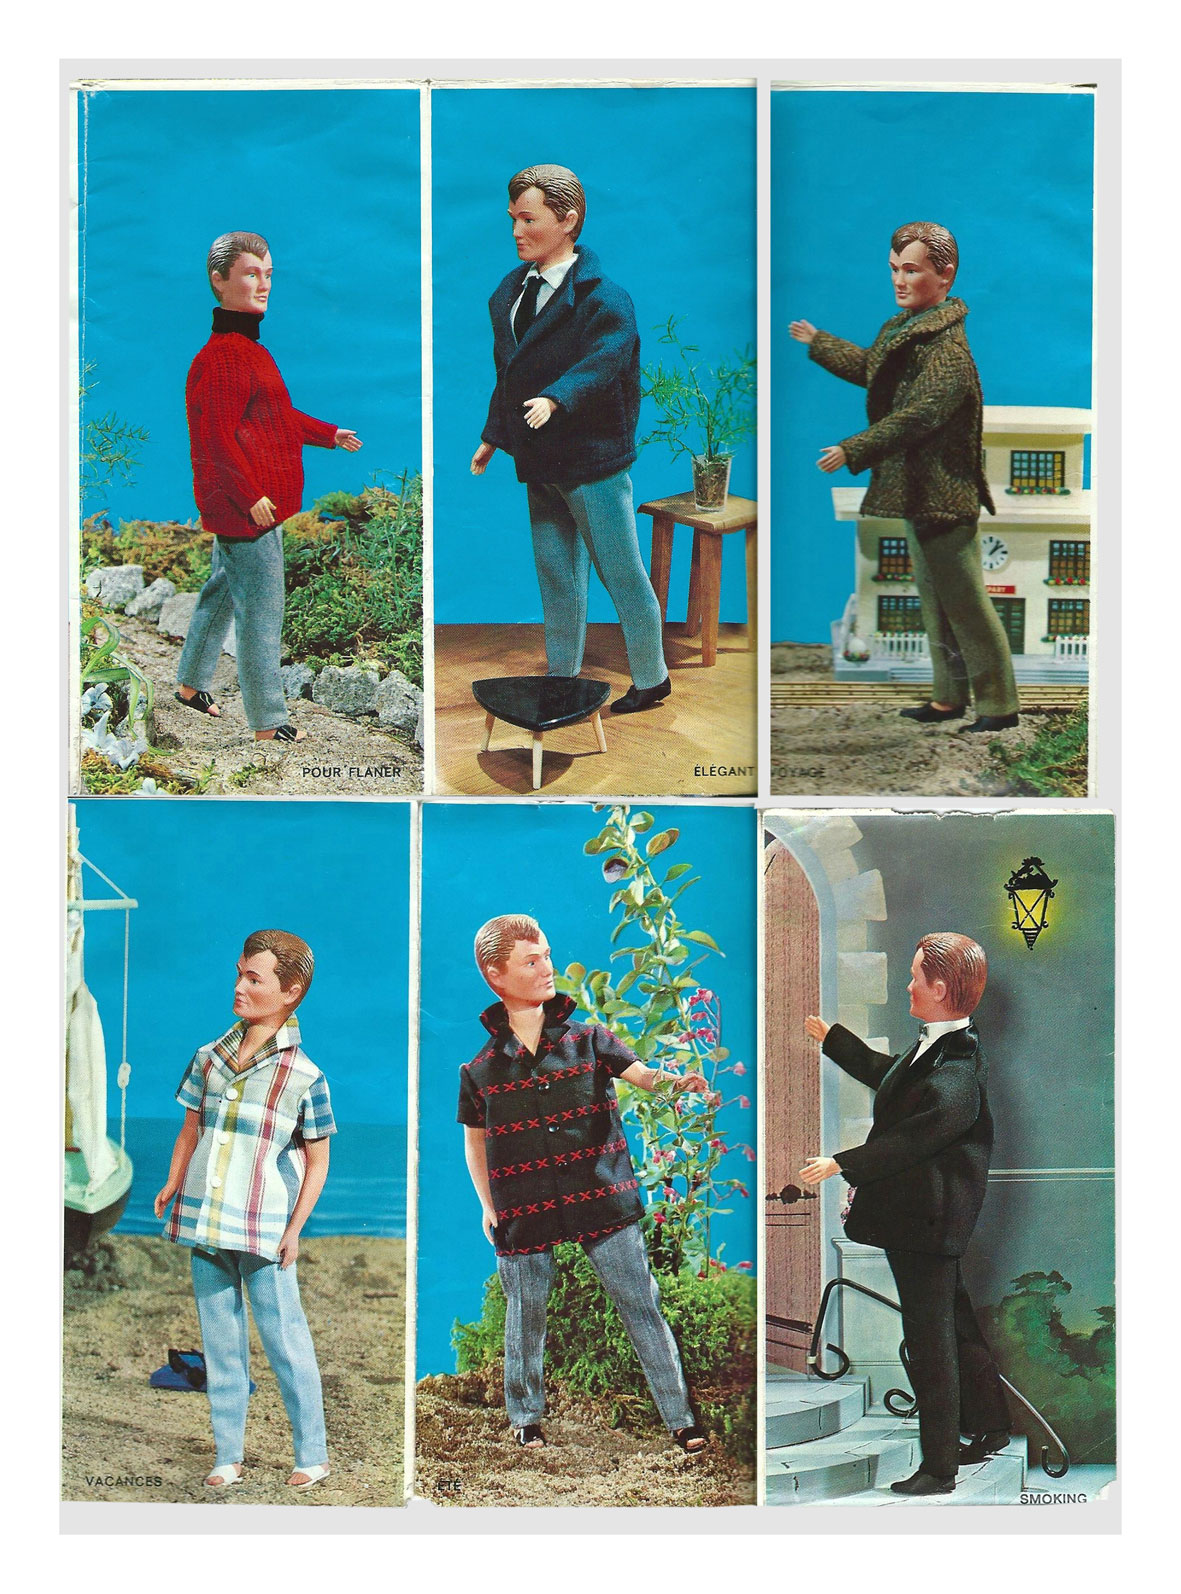 From 1966 French Mily & Jacky brochure by GéGé